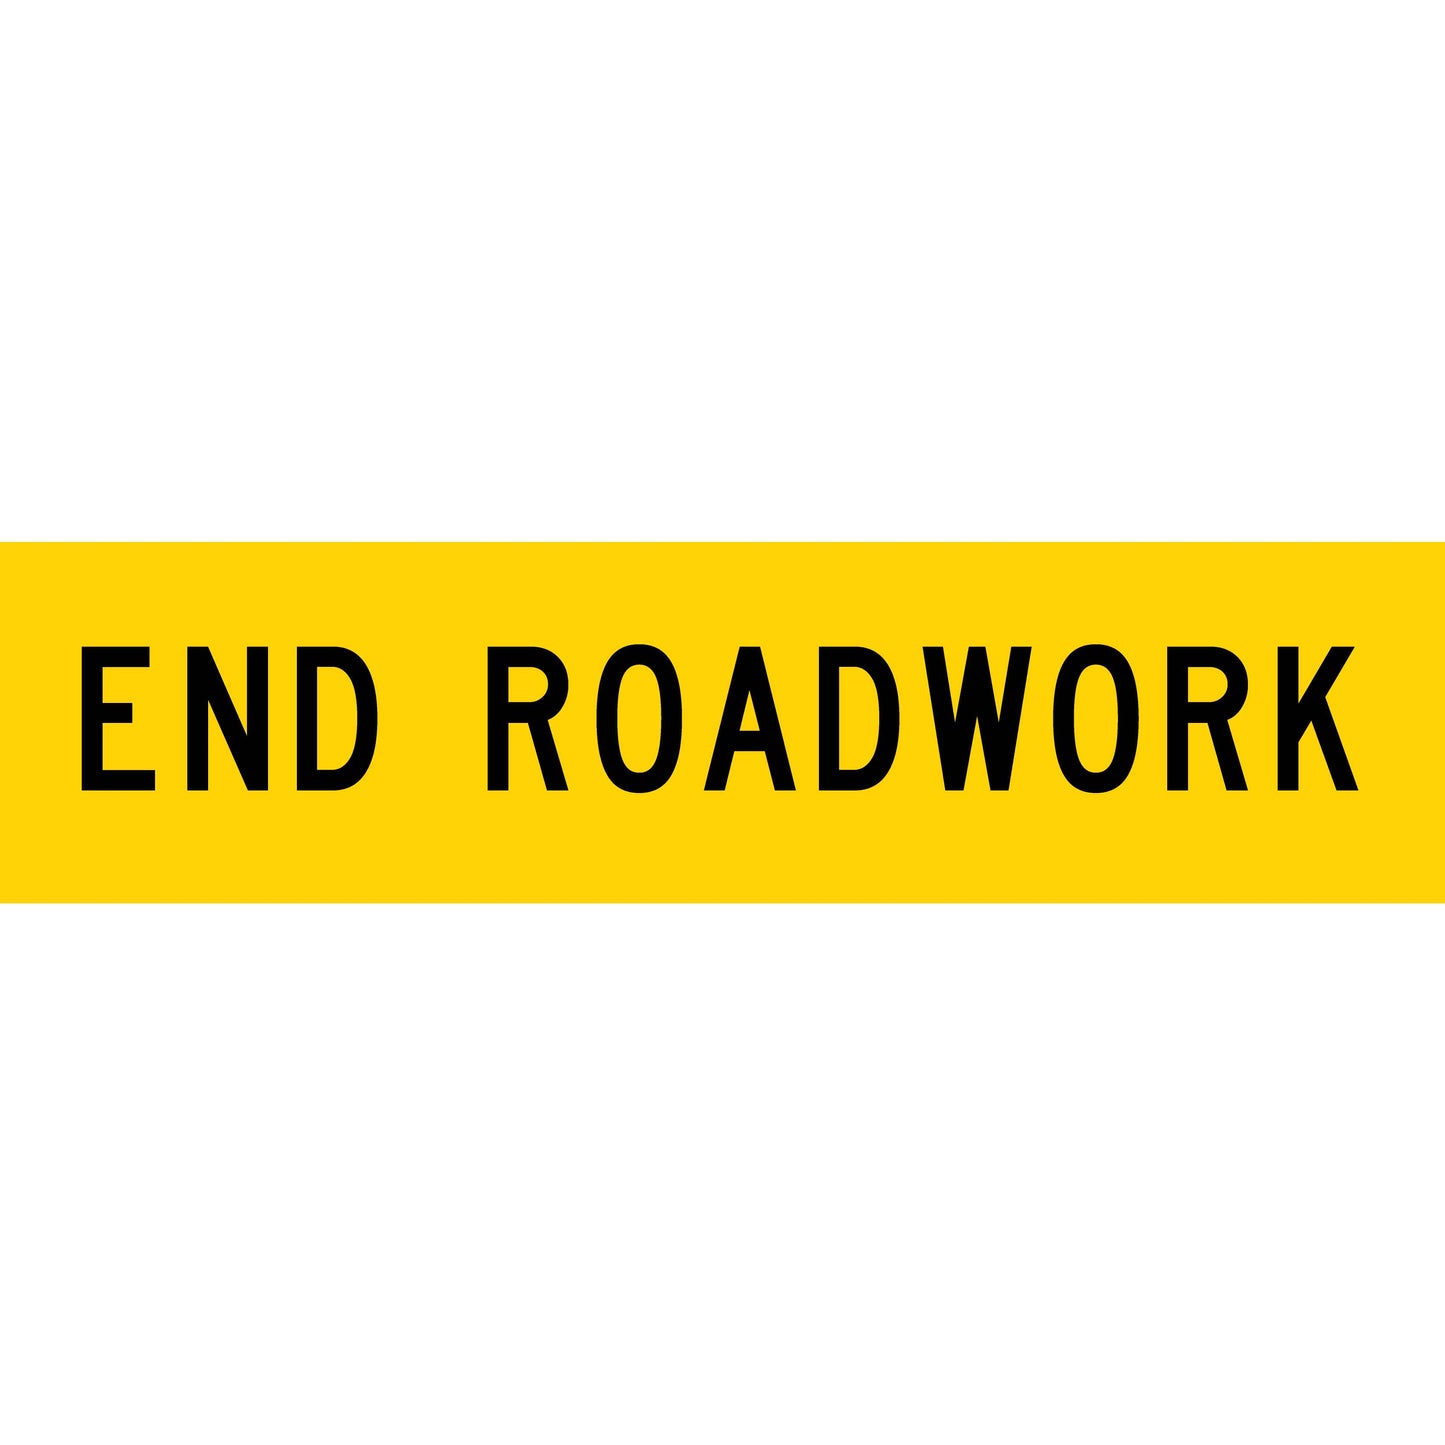 End Roadwork Long Skinny Multi Message Reflective Traffic Sign